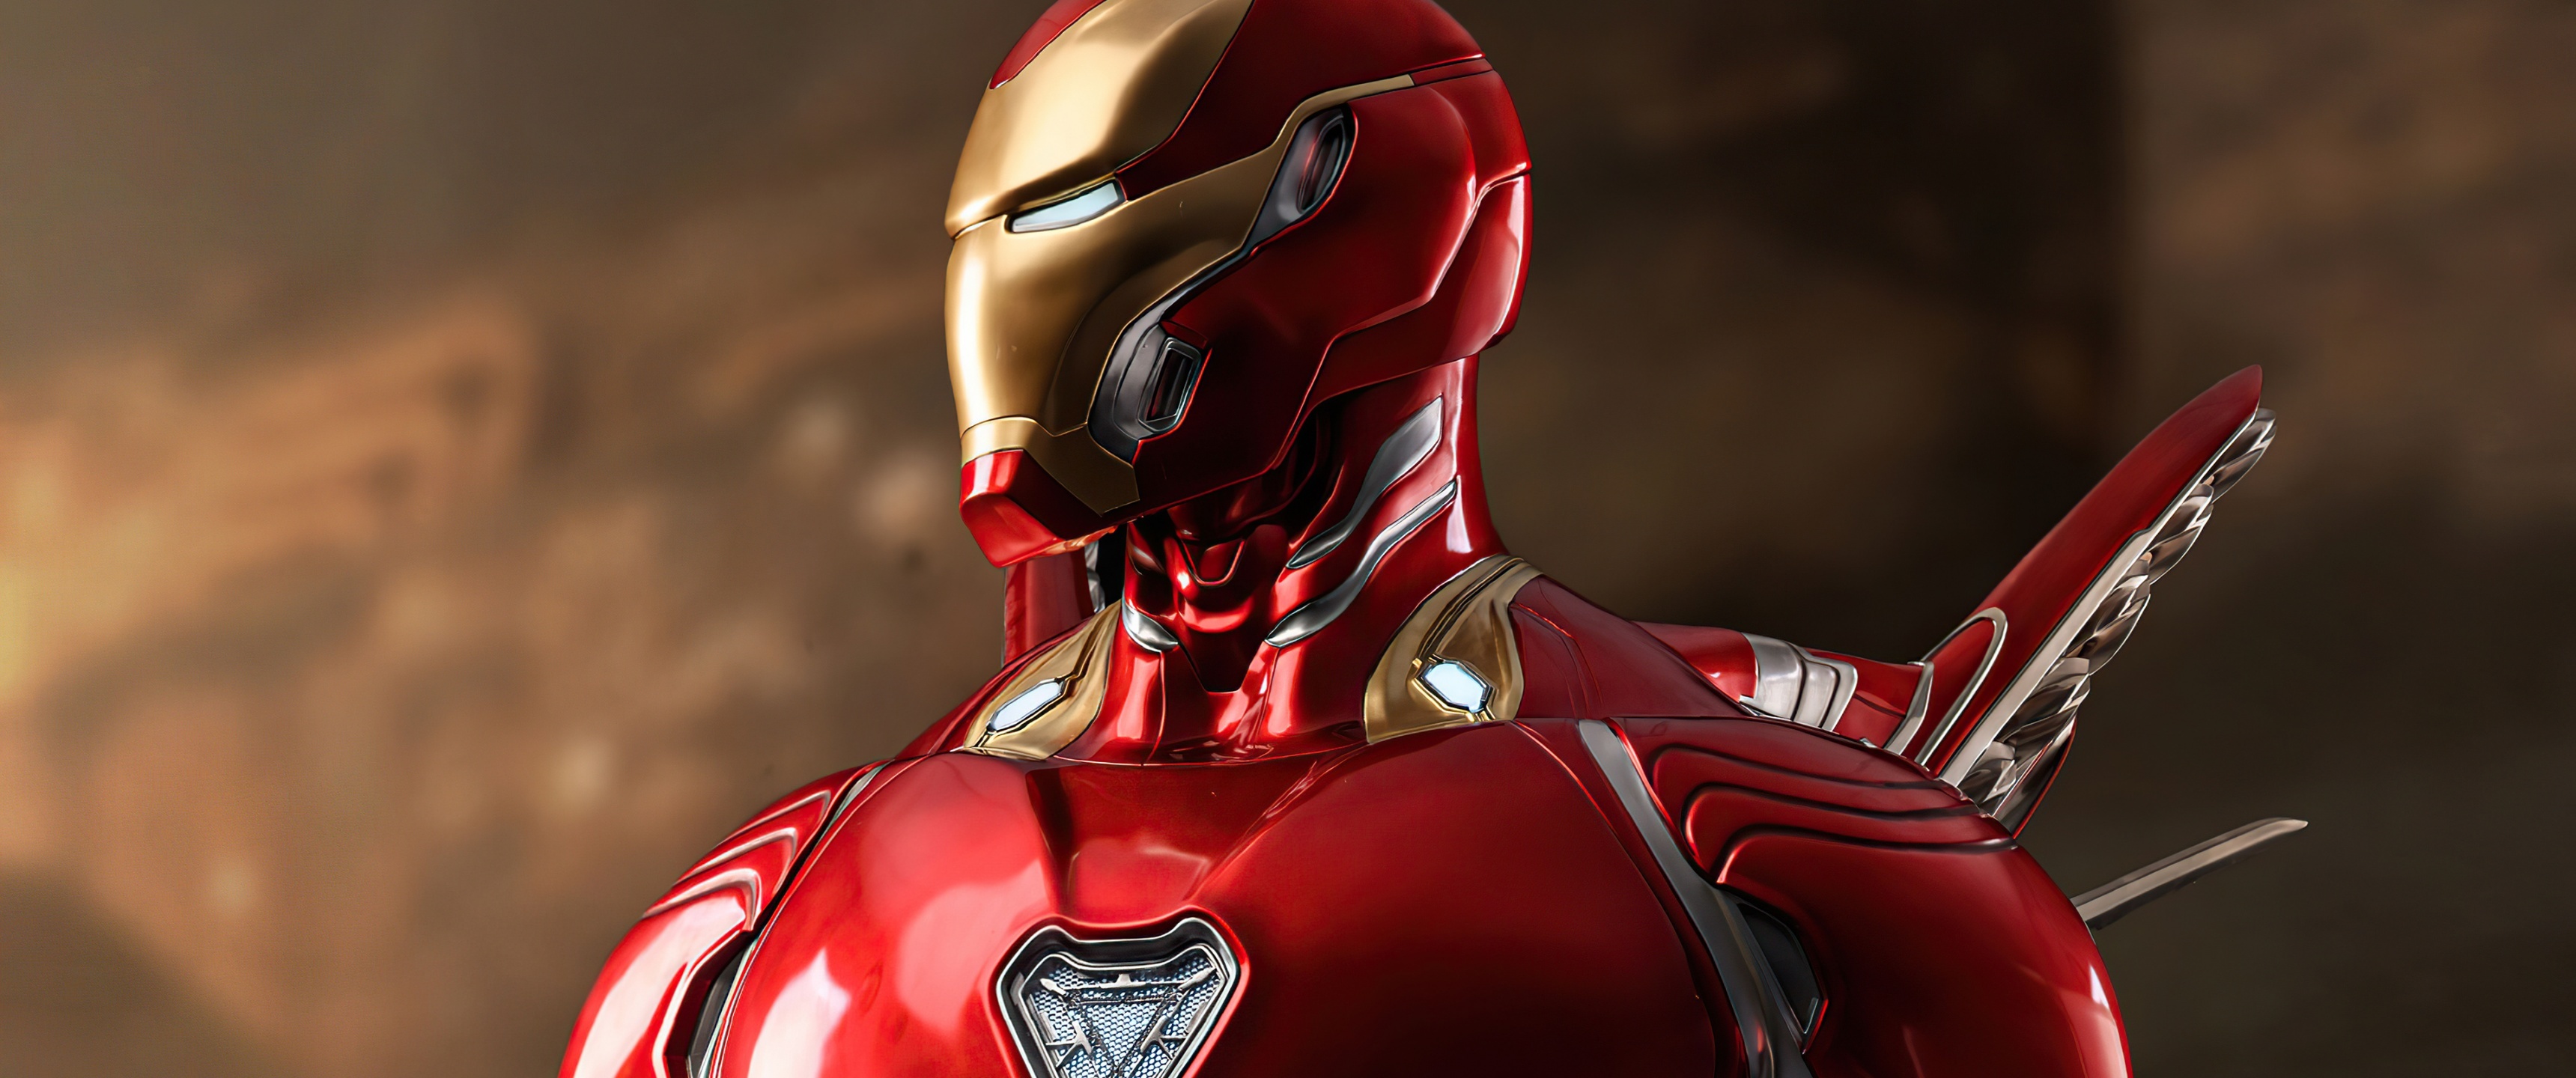 Iron Man Suit, 4K wallpapers, Marvel superheroes, 3440x1440 Dual Screen Desktop